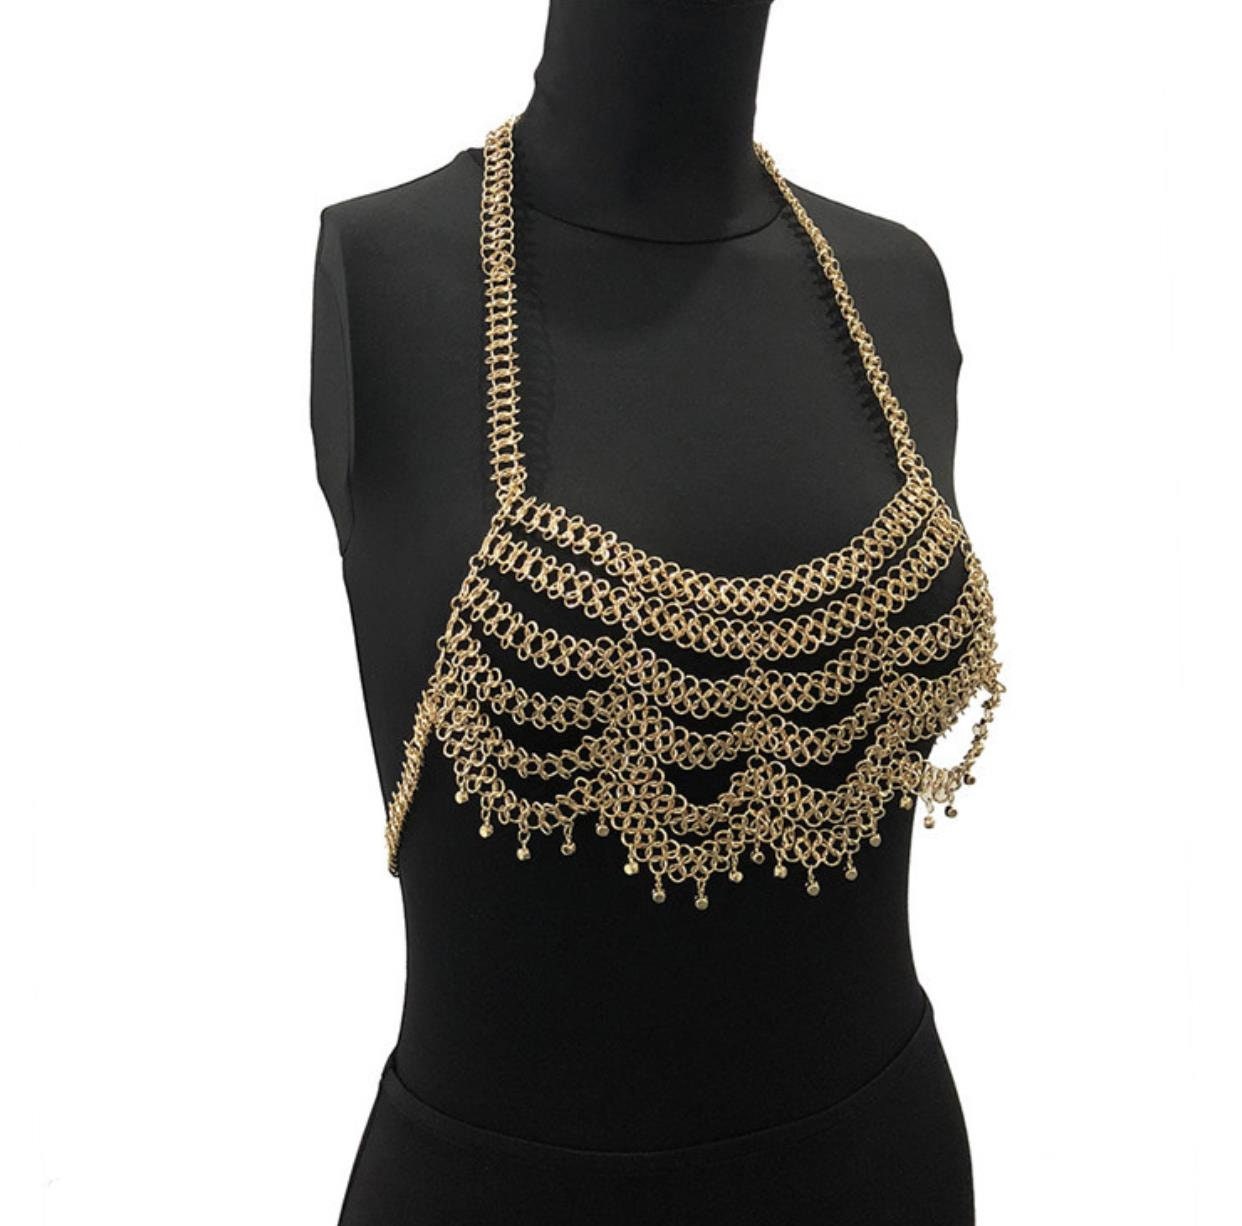 Golden bra chain/metal bra body chain | Etsy